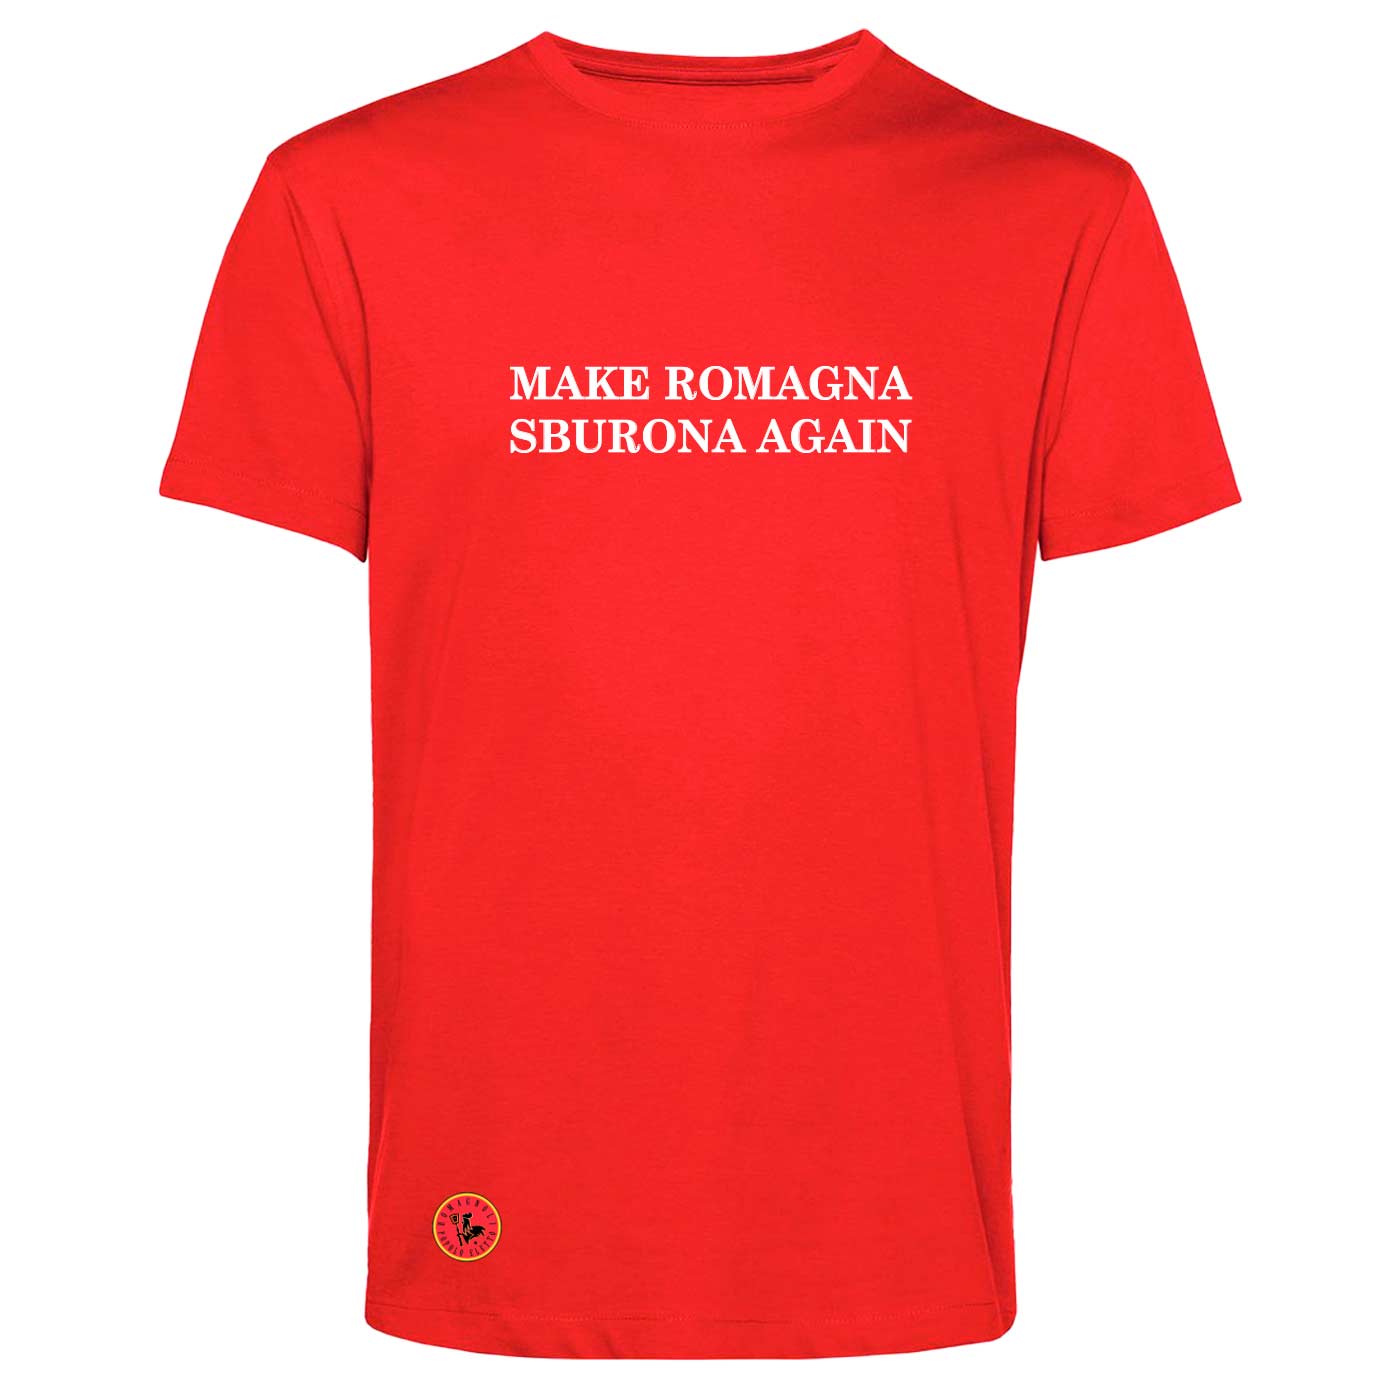 Make Romagna Sburona Again